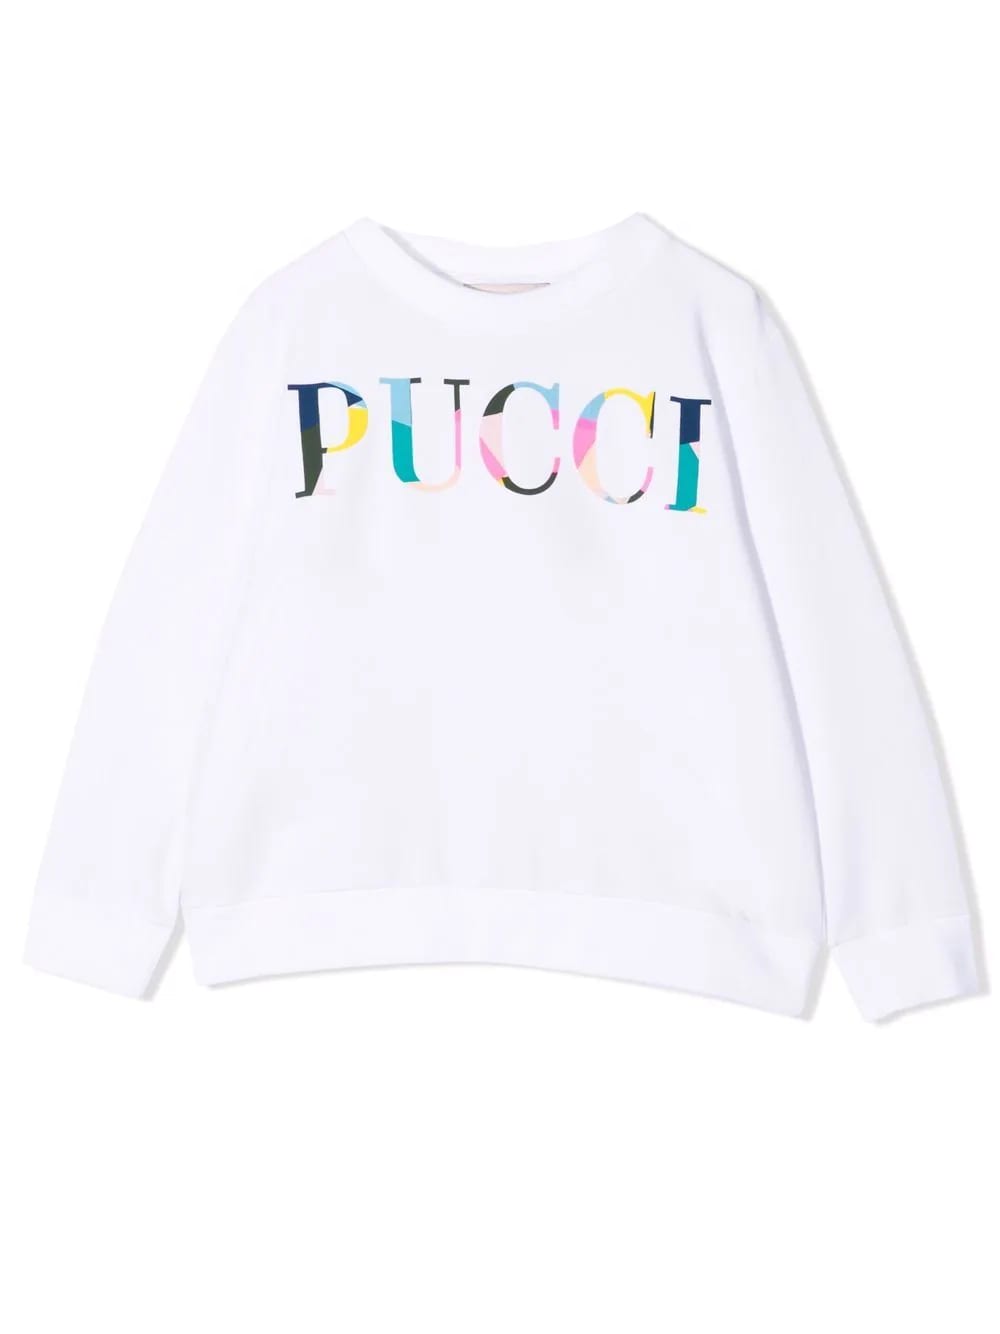 Emilio Pucci White Sweatshirt With Print